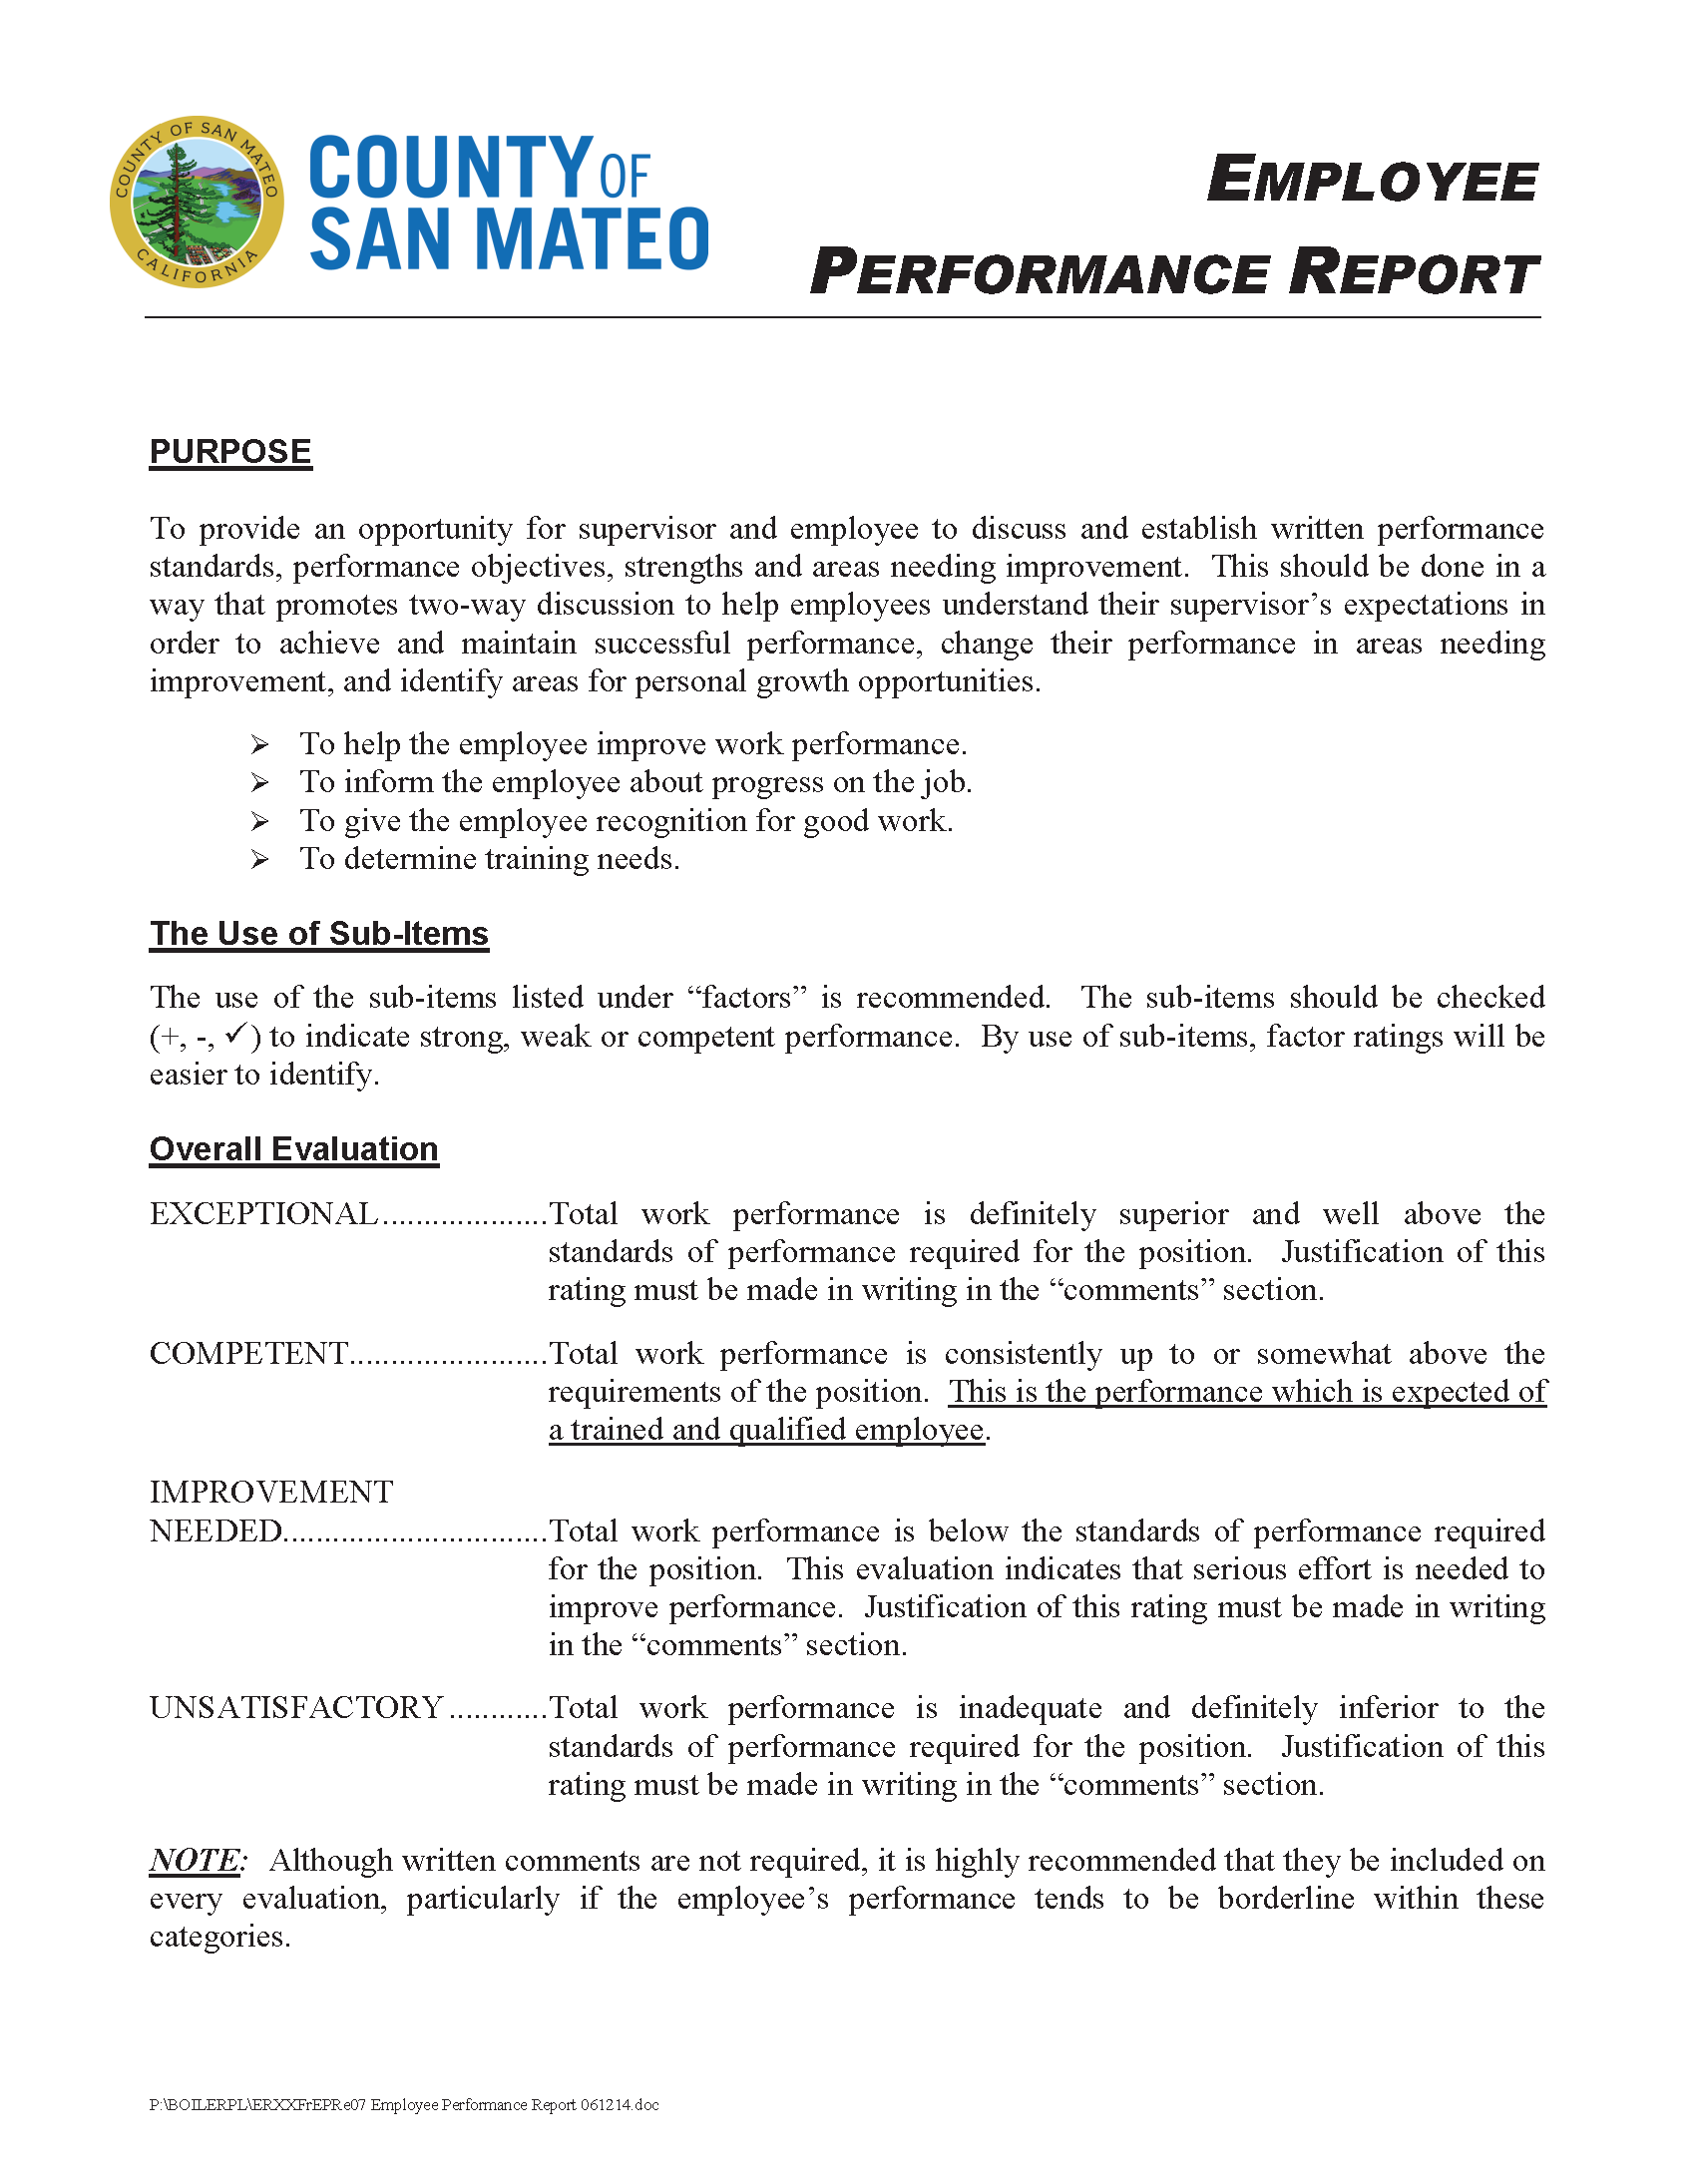 Sample Employee Performance Report – Employee & Labor Relations